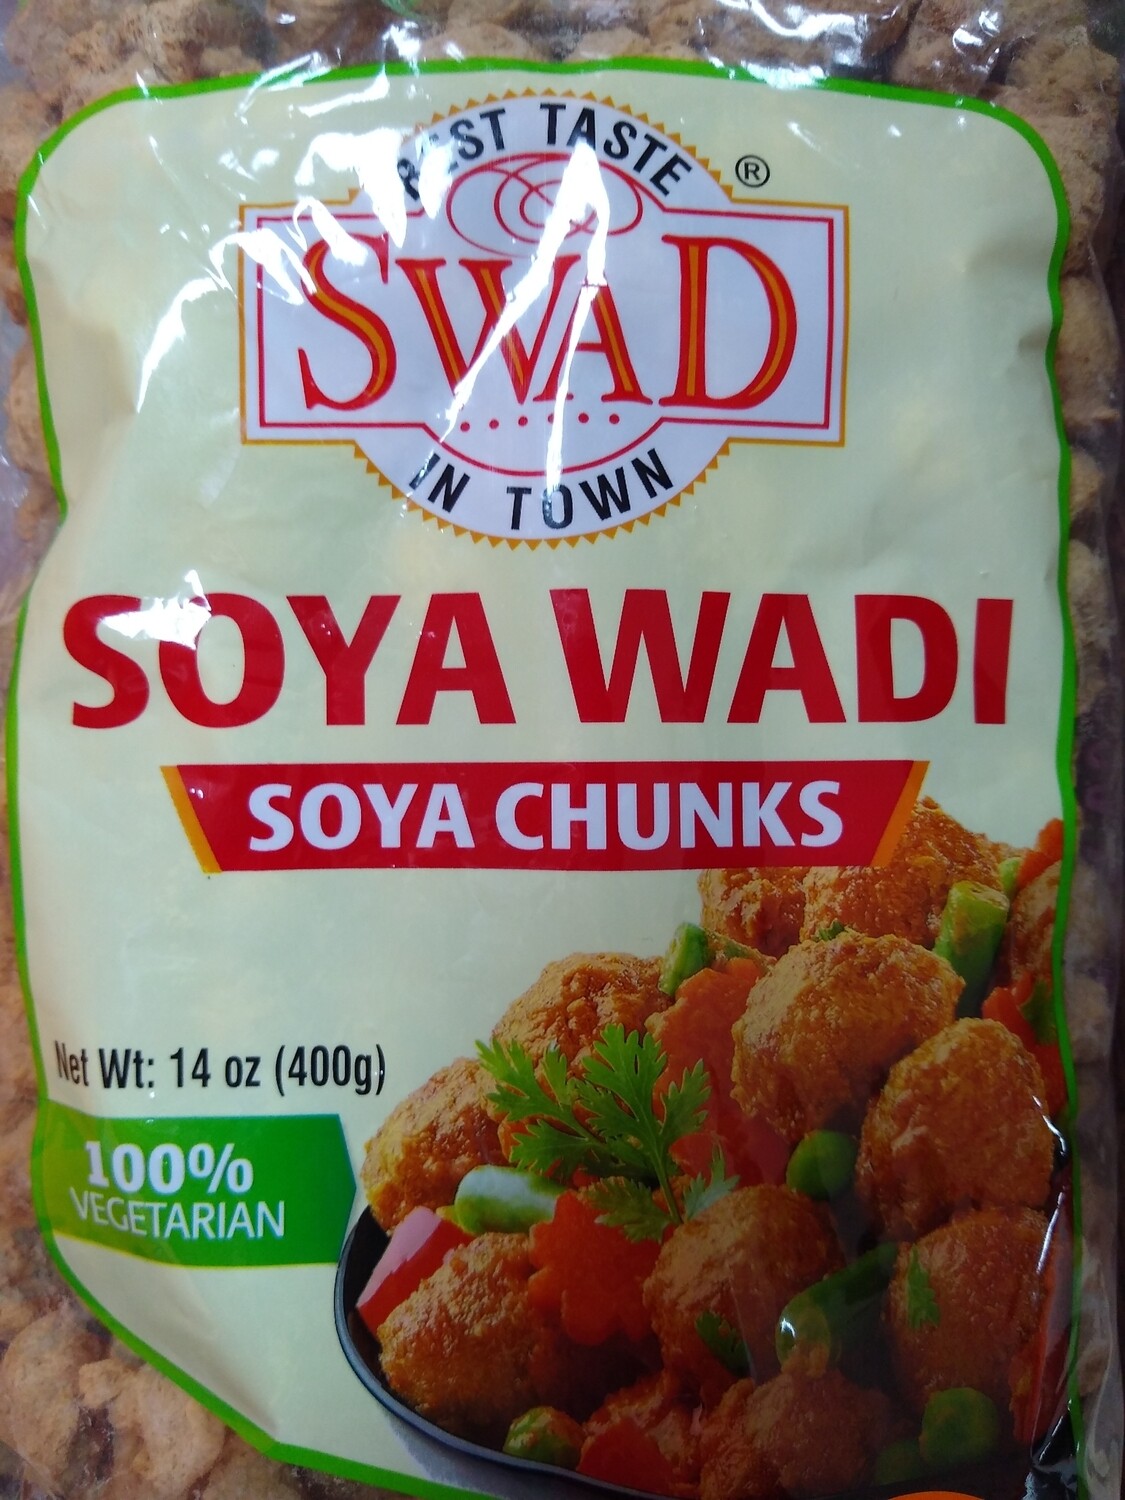 Swad Soya Chunks 400g